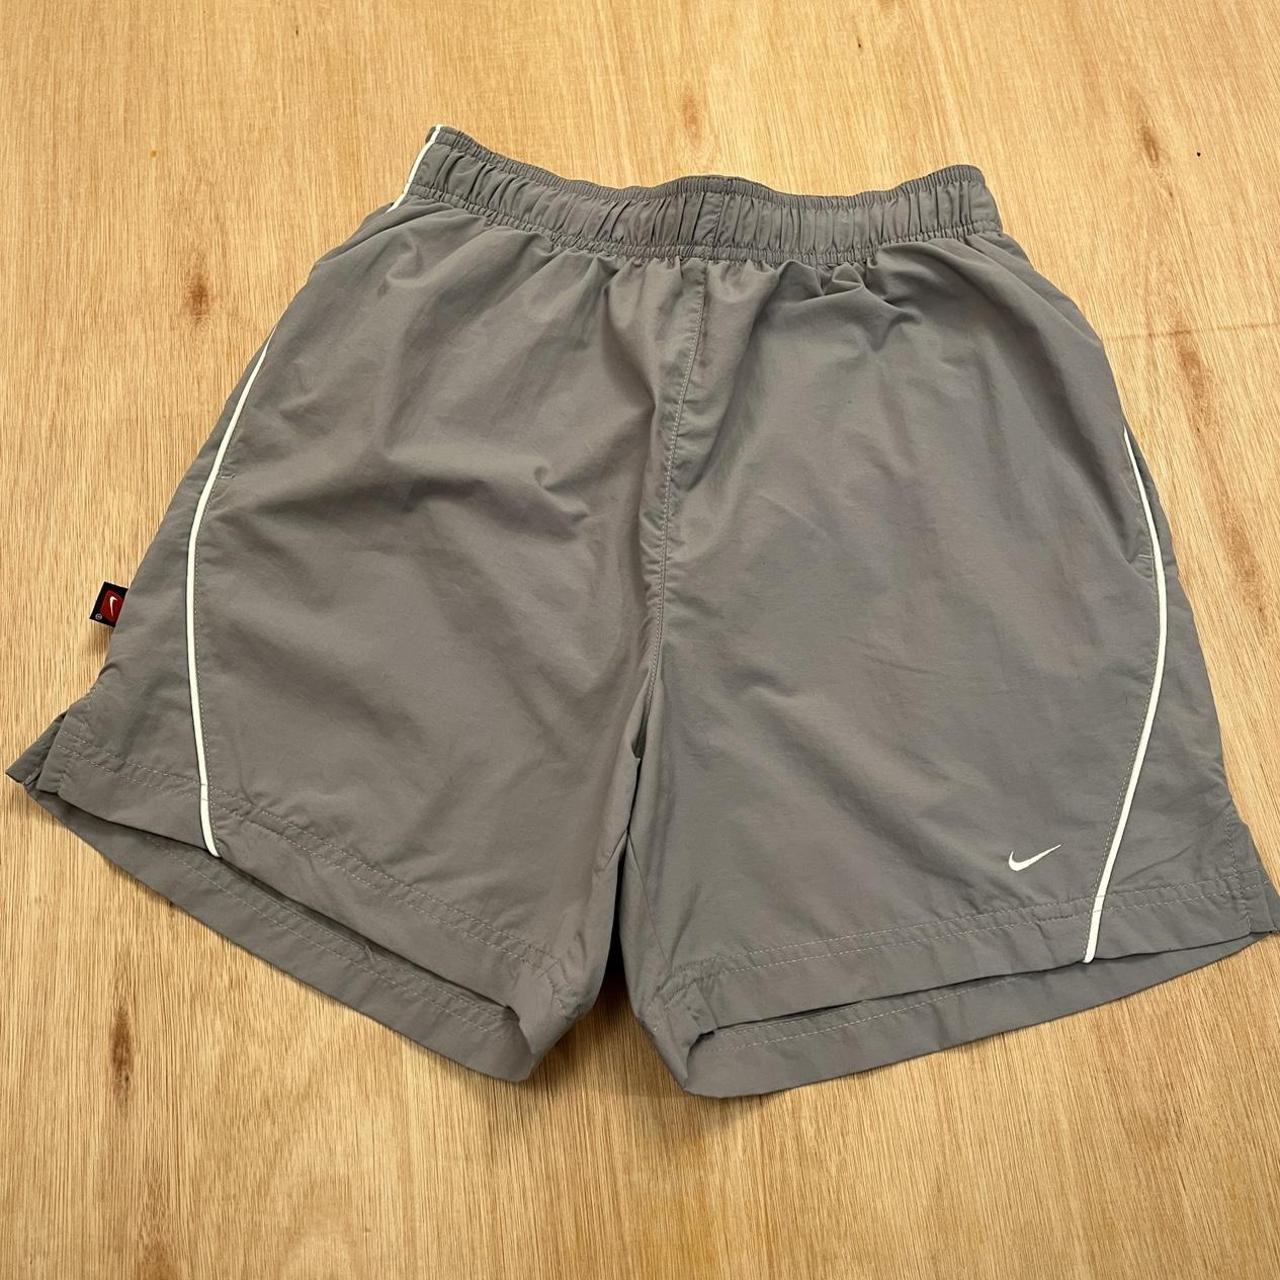 Nike Men's Grey and White Shorts | Depop